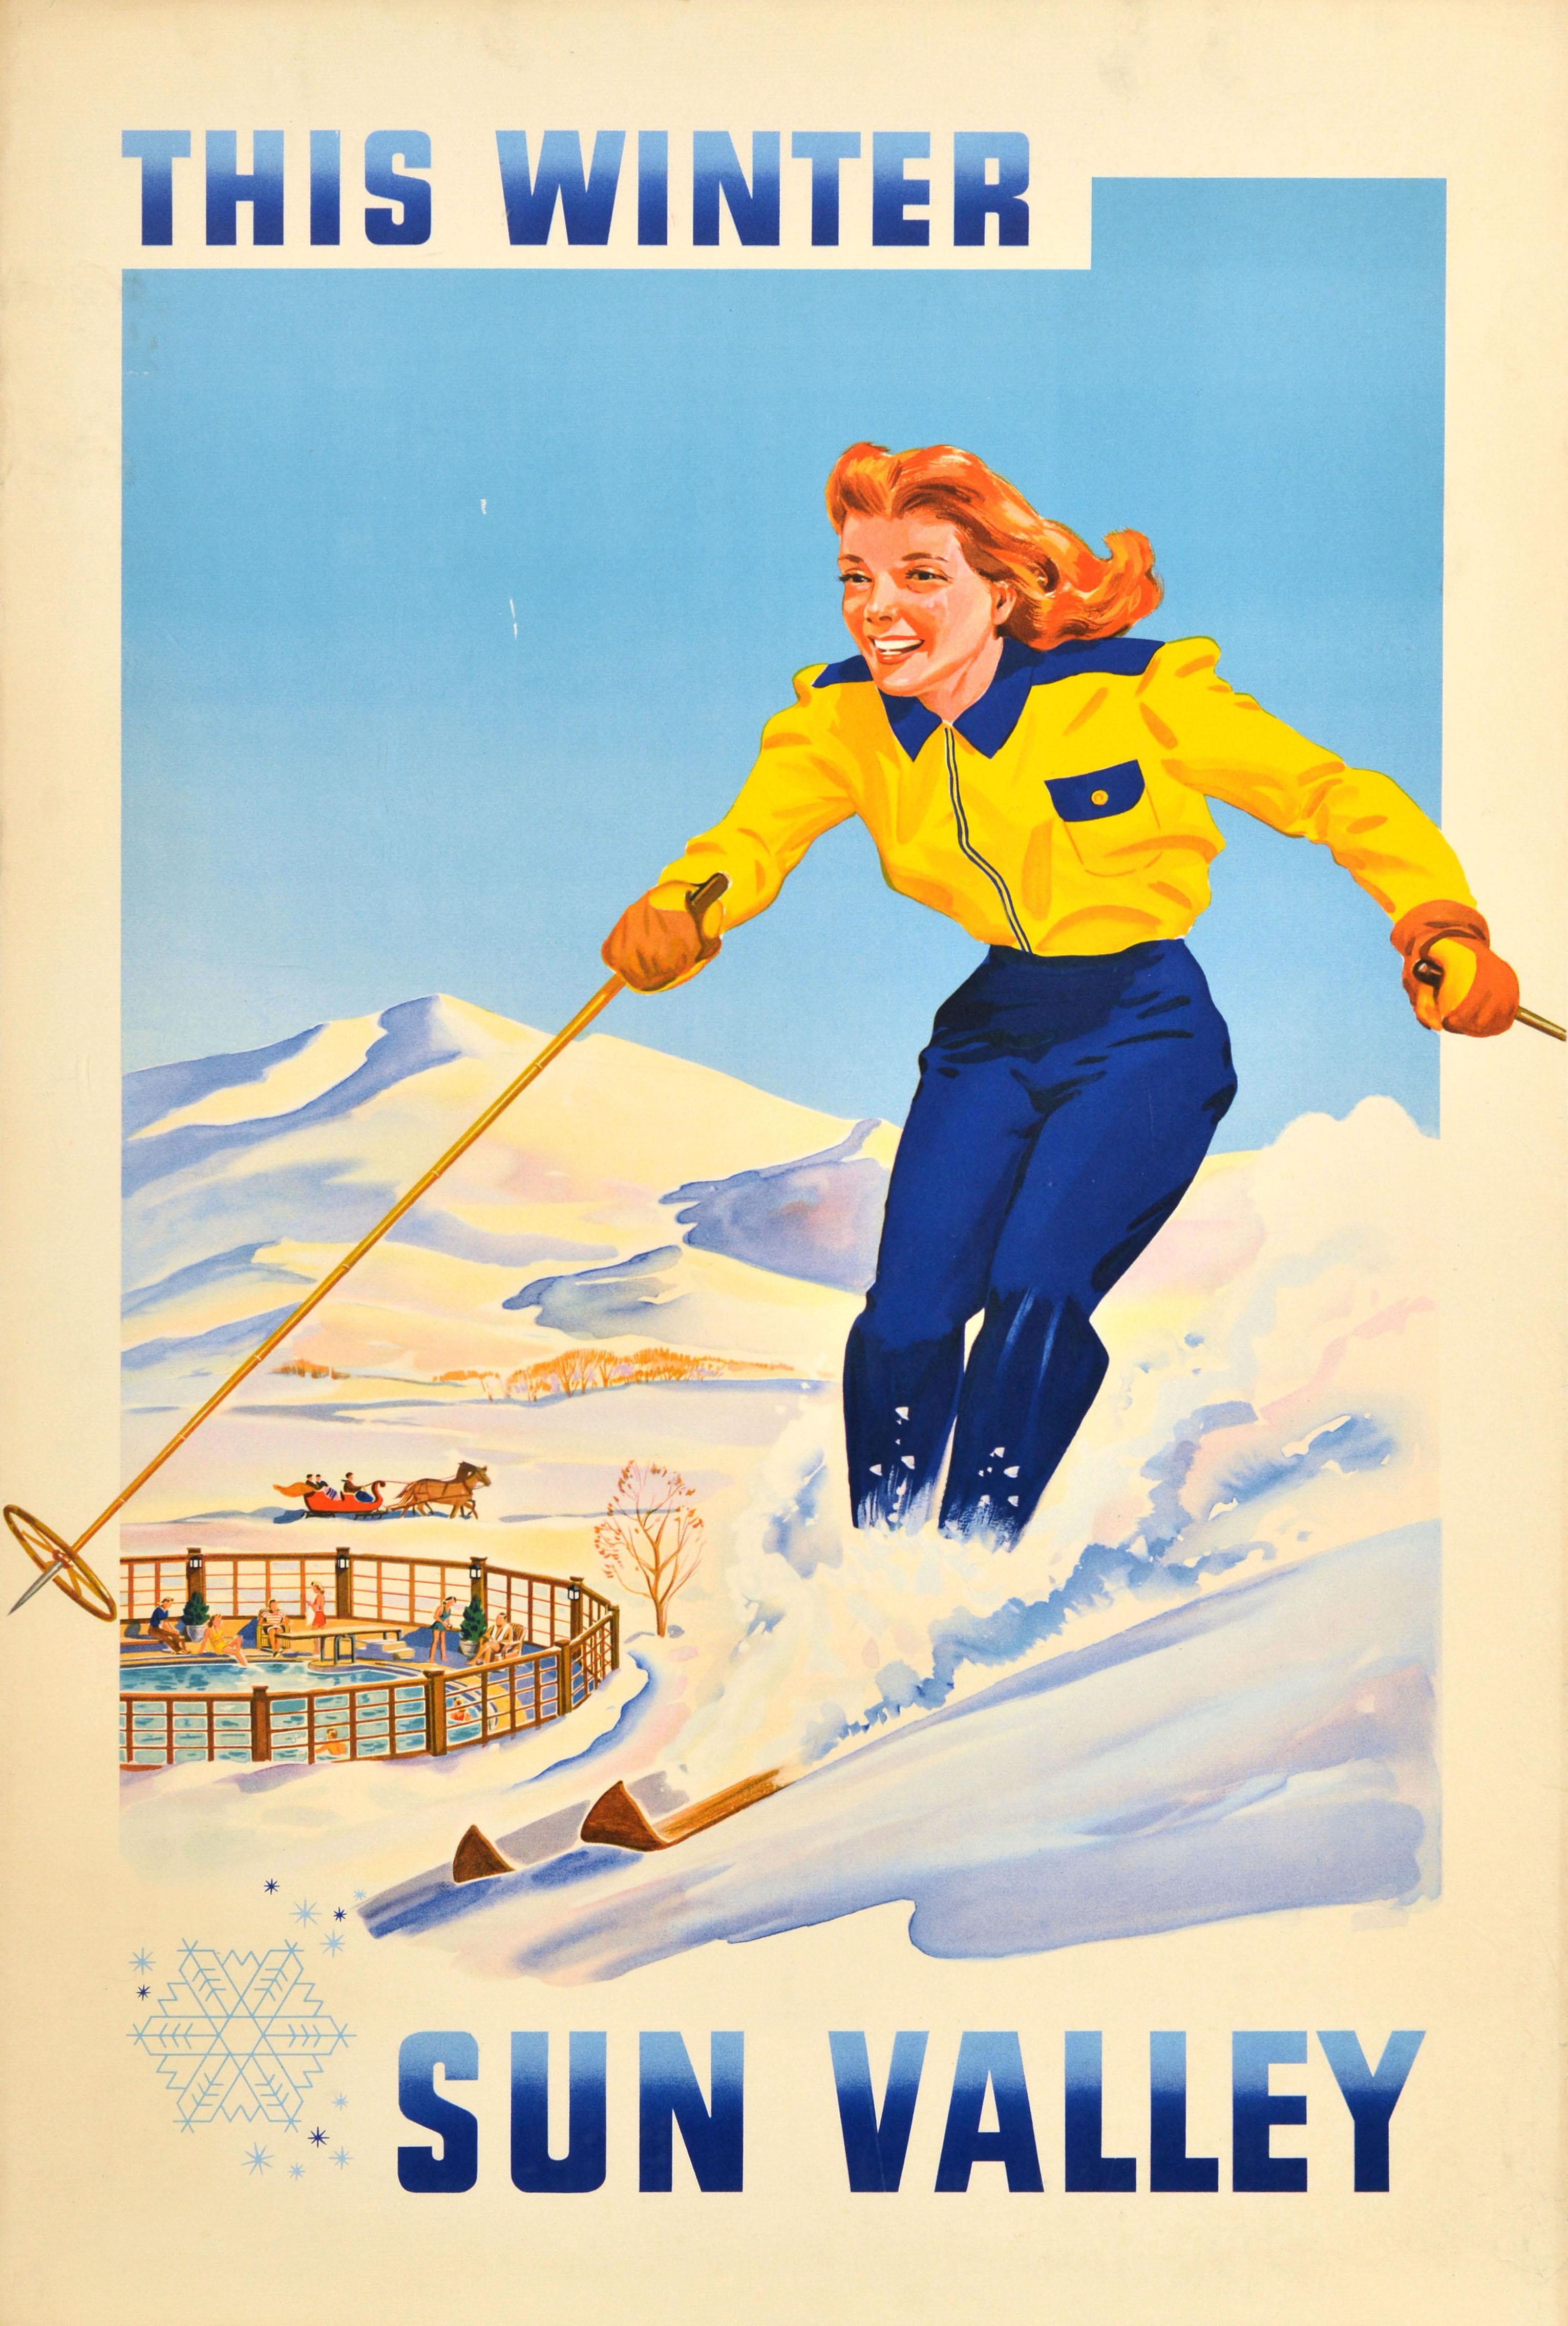 Unknown Print - Original Vintage Winter Ski Sports Travel Poster This Winter Sun Valley Idaho